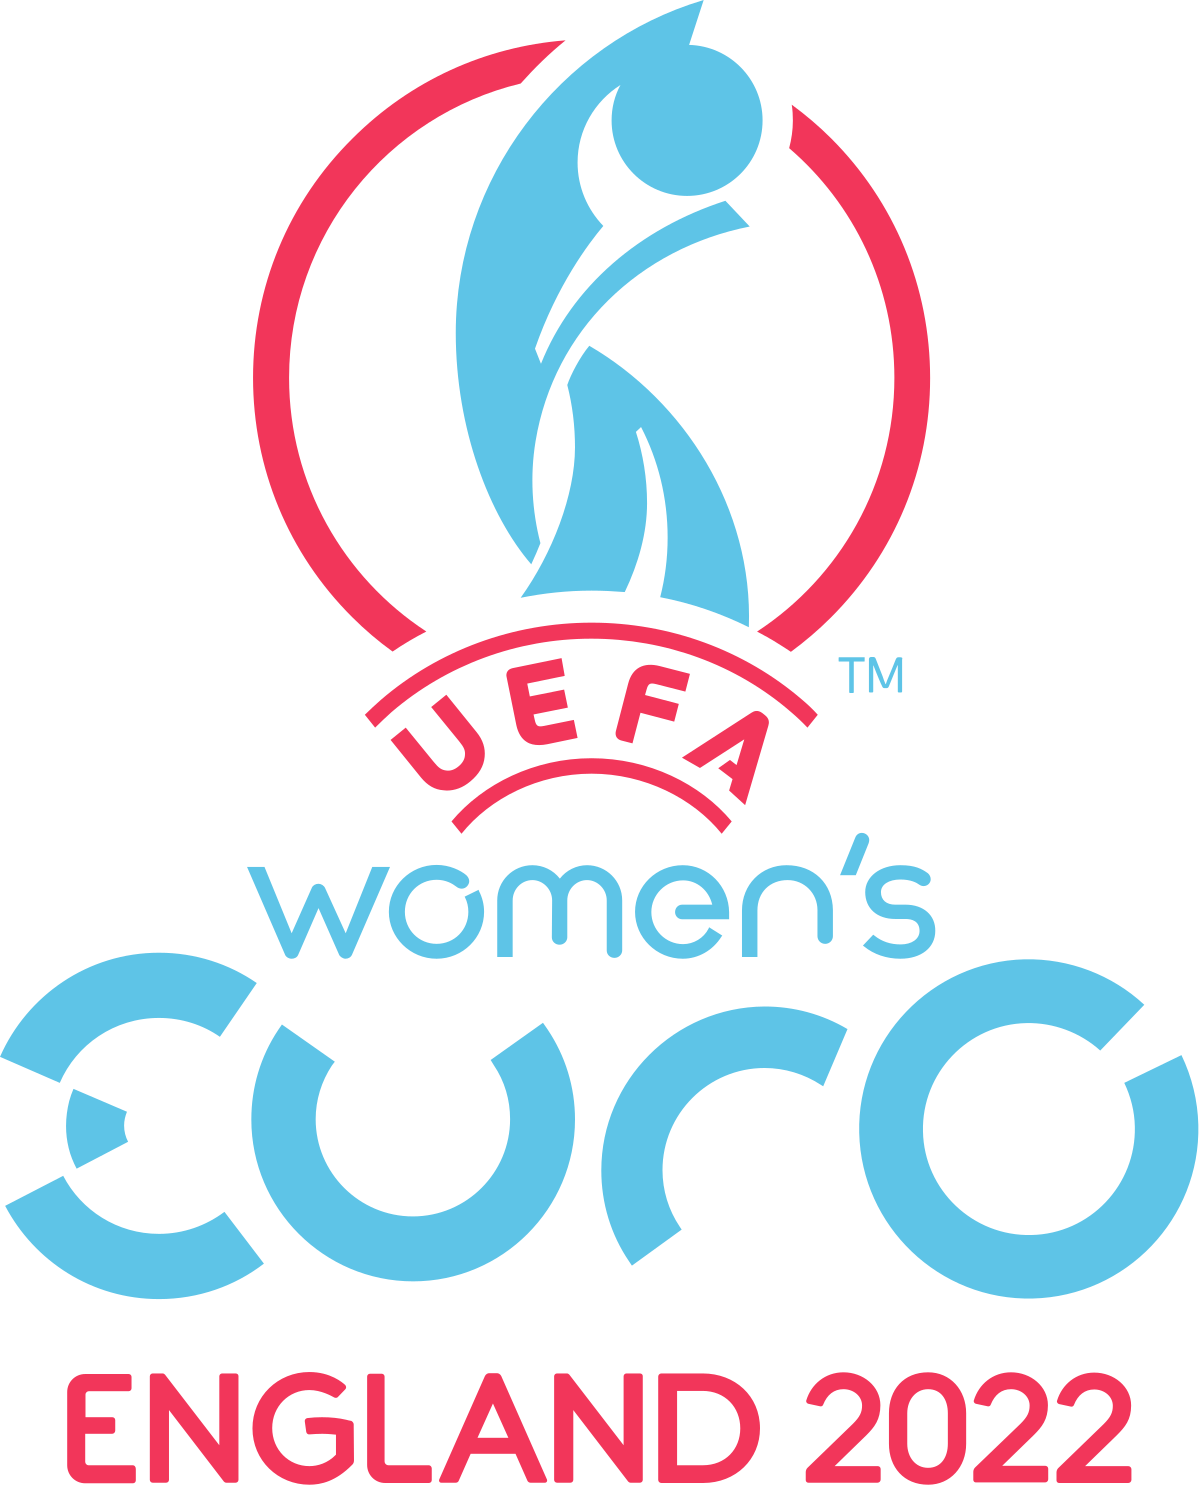 Women's Euro England 2022